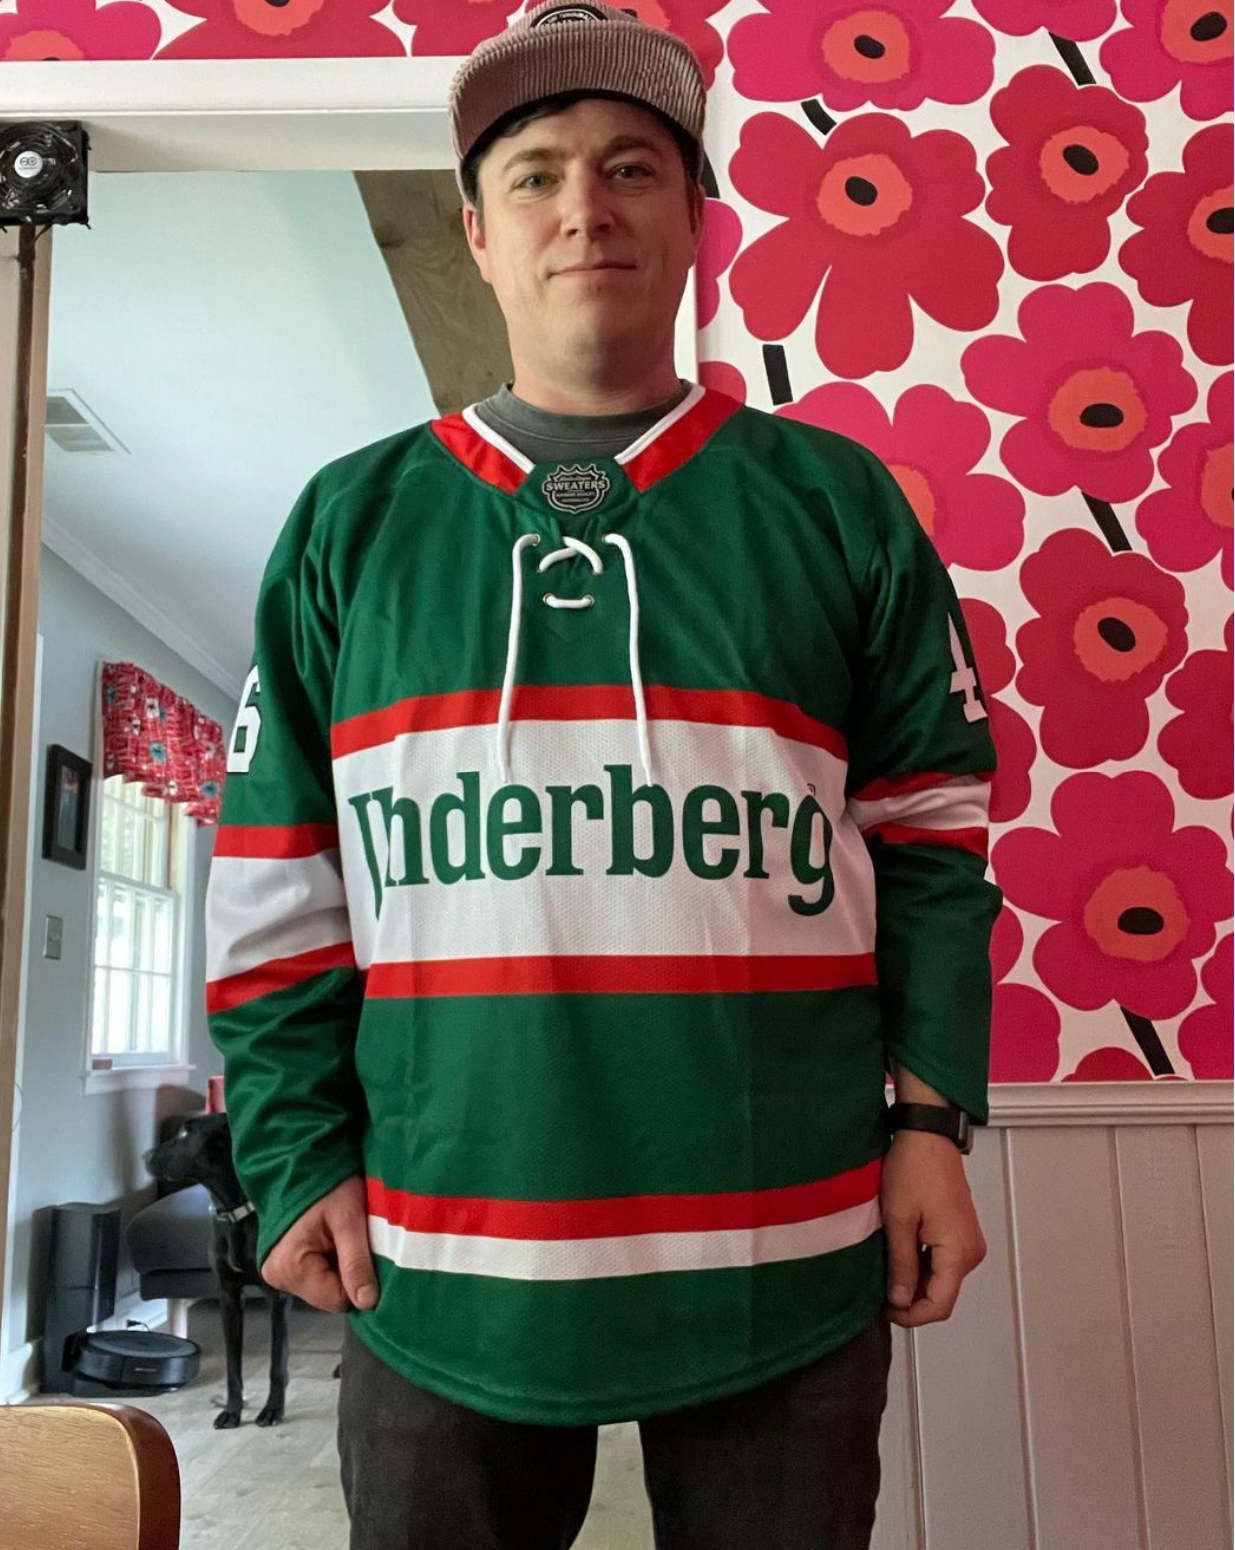 Game On: Underberg's High-Performance Hockey Jerseys!